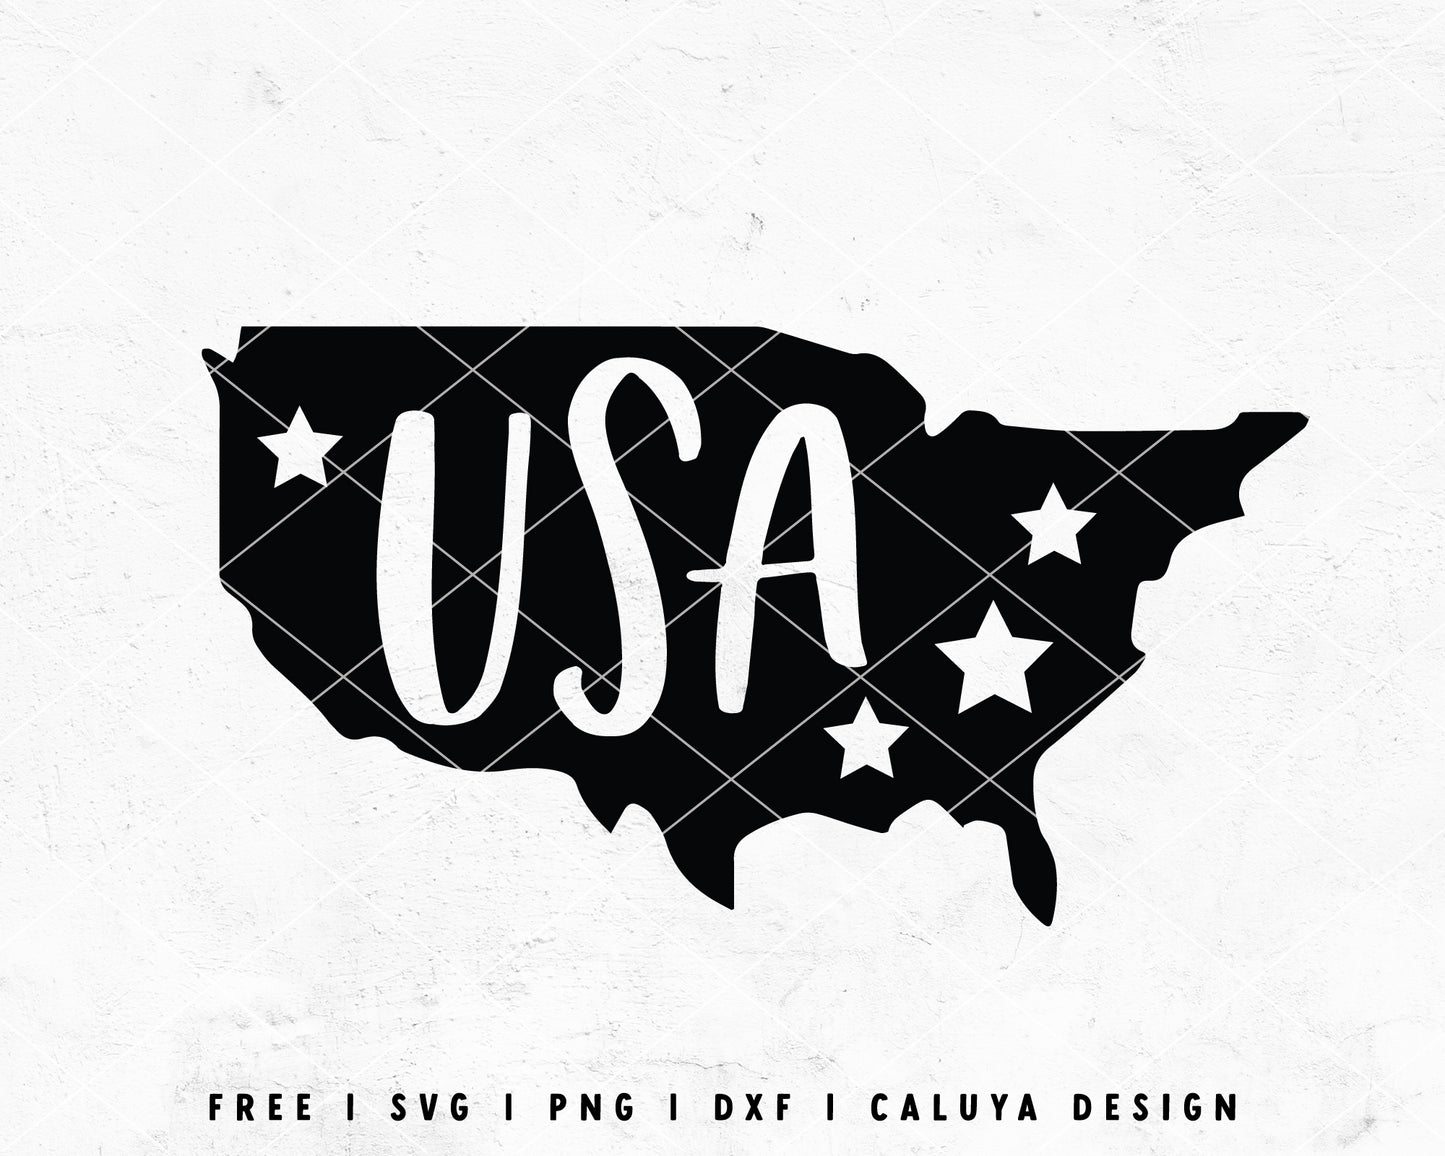 FREE USA SVG | America SVG Cut File for Cricut, Cameo Silhouette | Free SVG Cut File